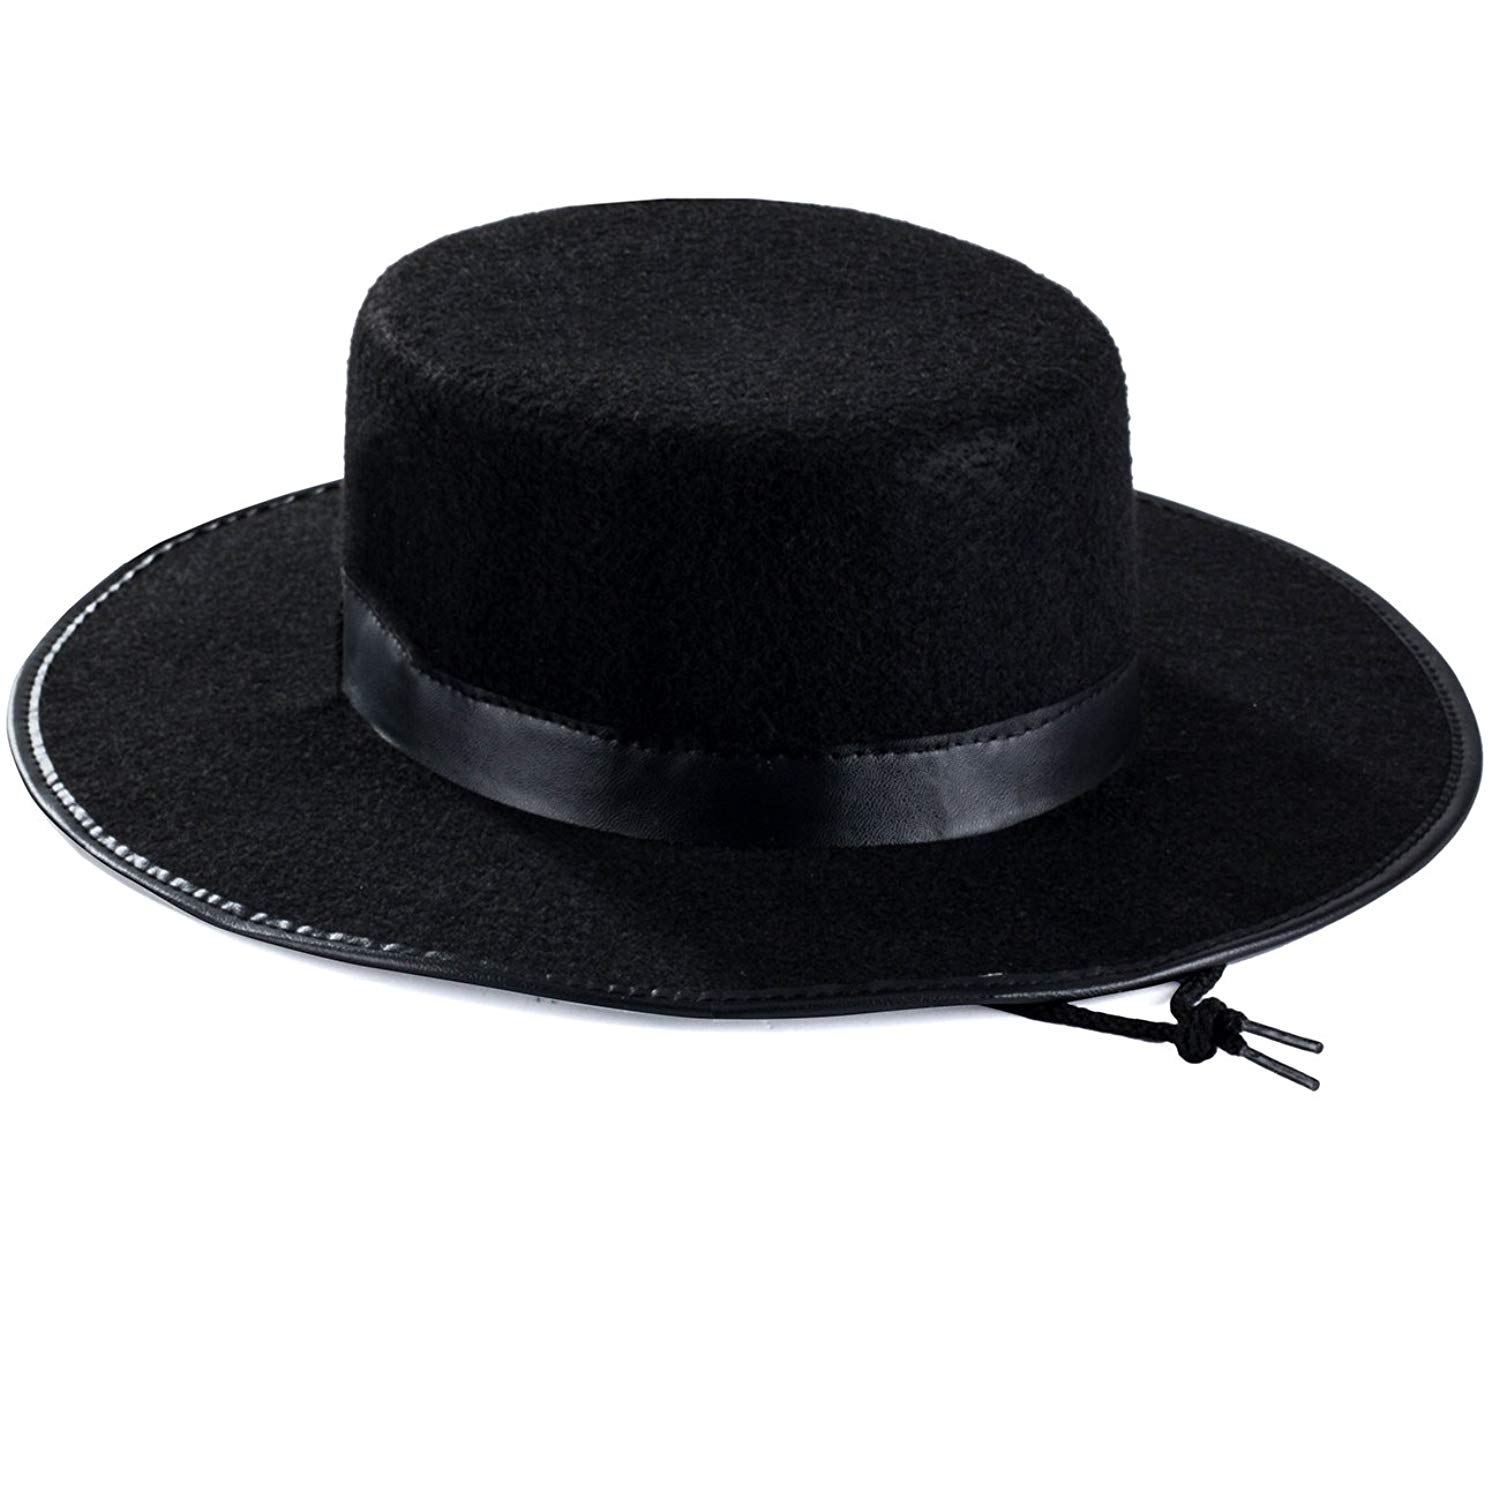 Шляпа недорого. Шляпа Гаучо мужская. Шляпа Федора Гаучо. Испанская шляпа Сомбреро. Итальянская шляпа мужская.